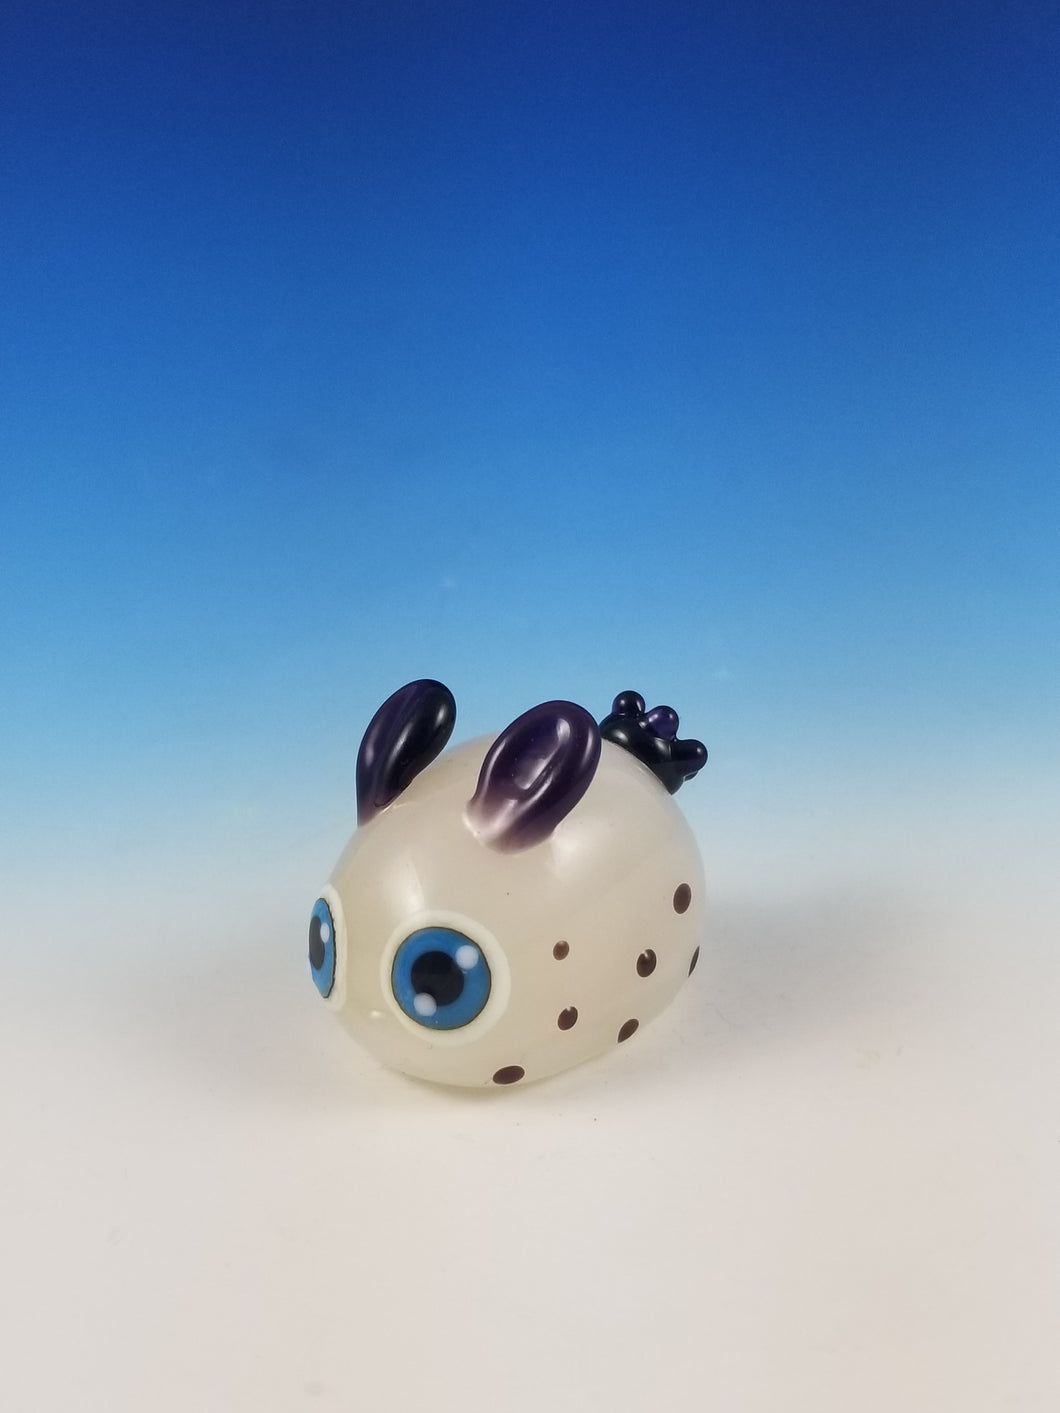 Mochi Sea Bunny Figure